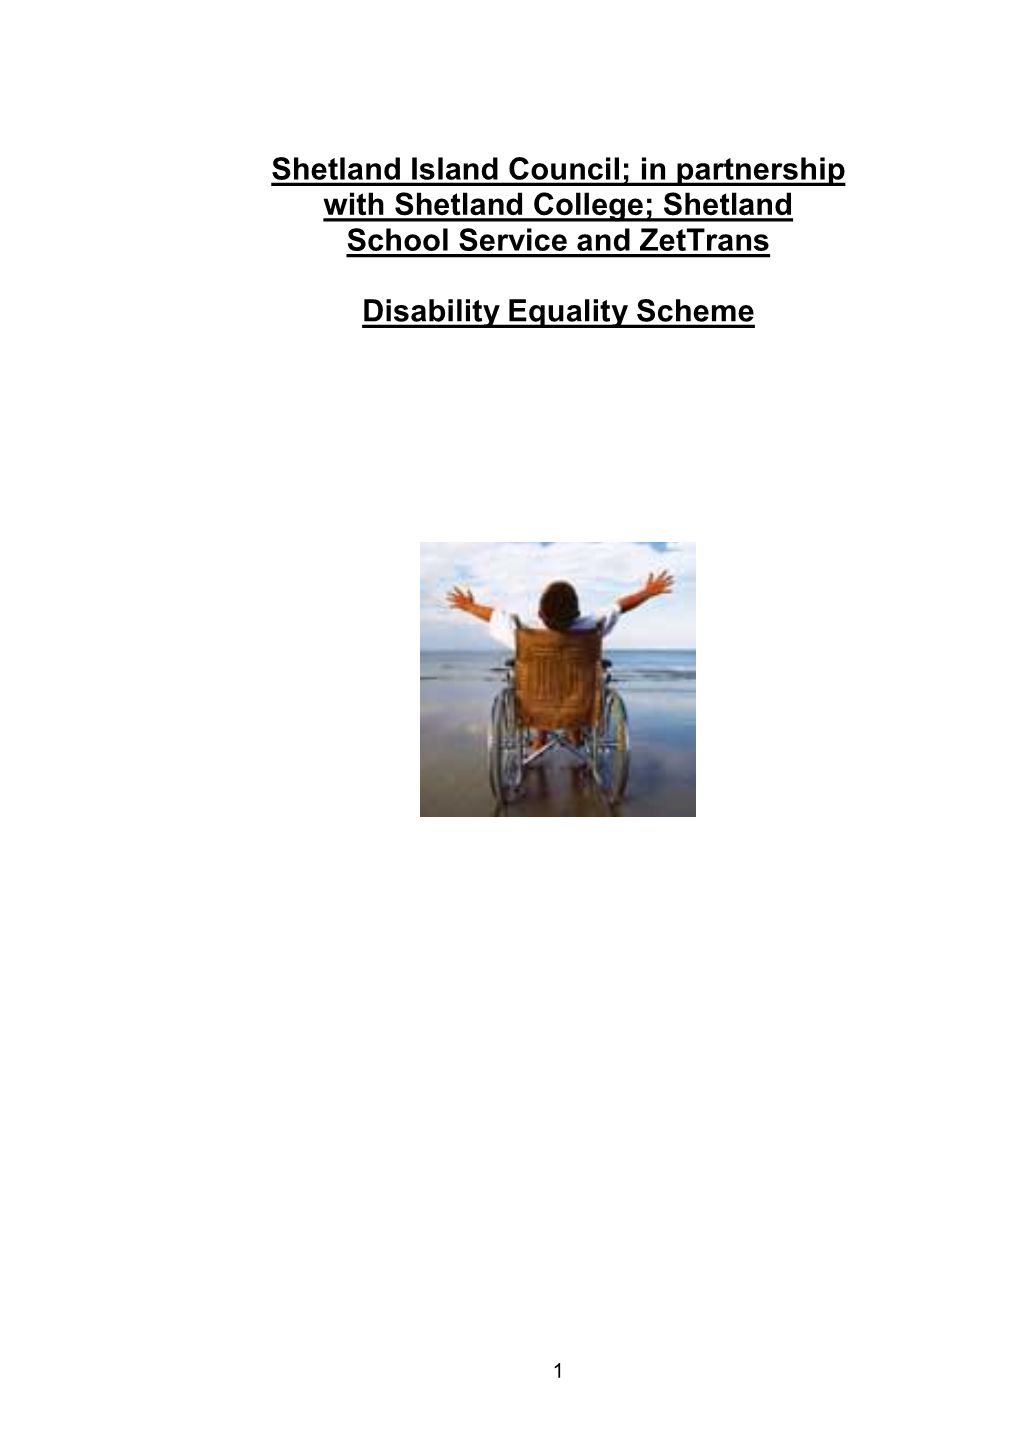 Аshetland School Service and Zettrans Disability Equality Scheme